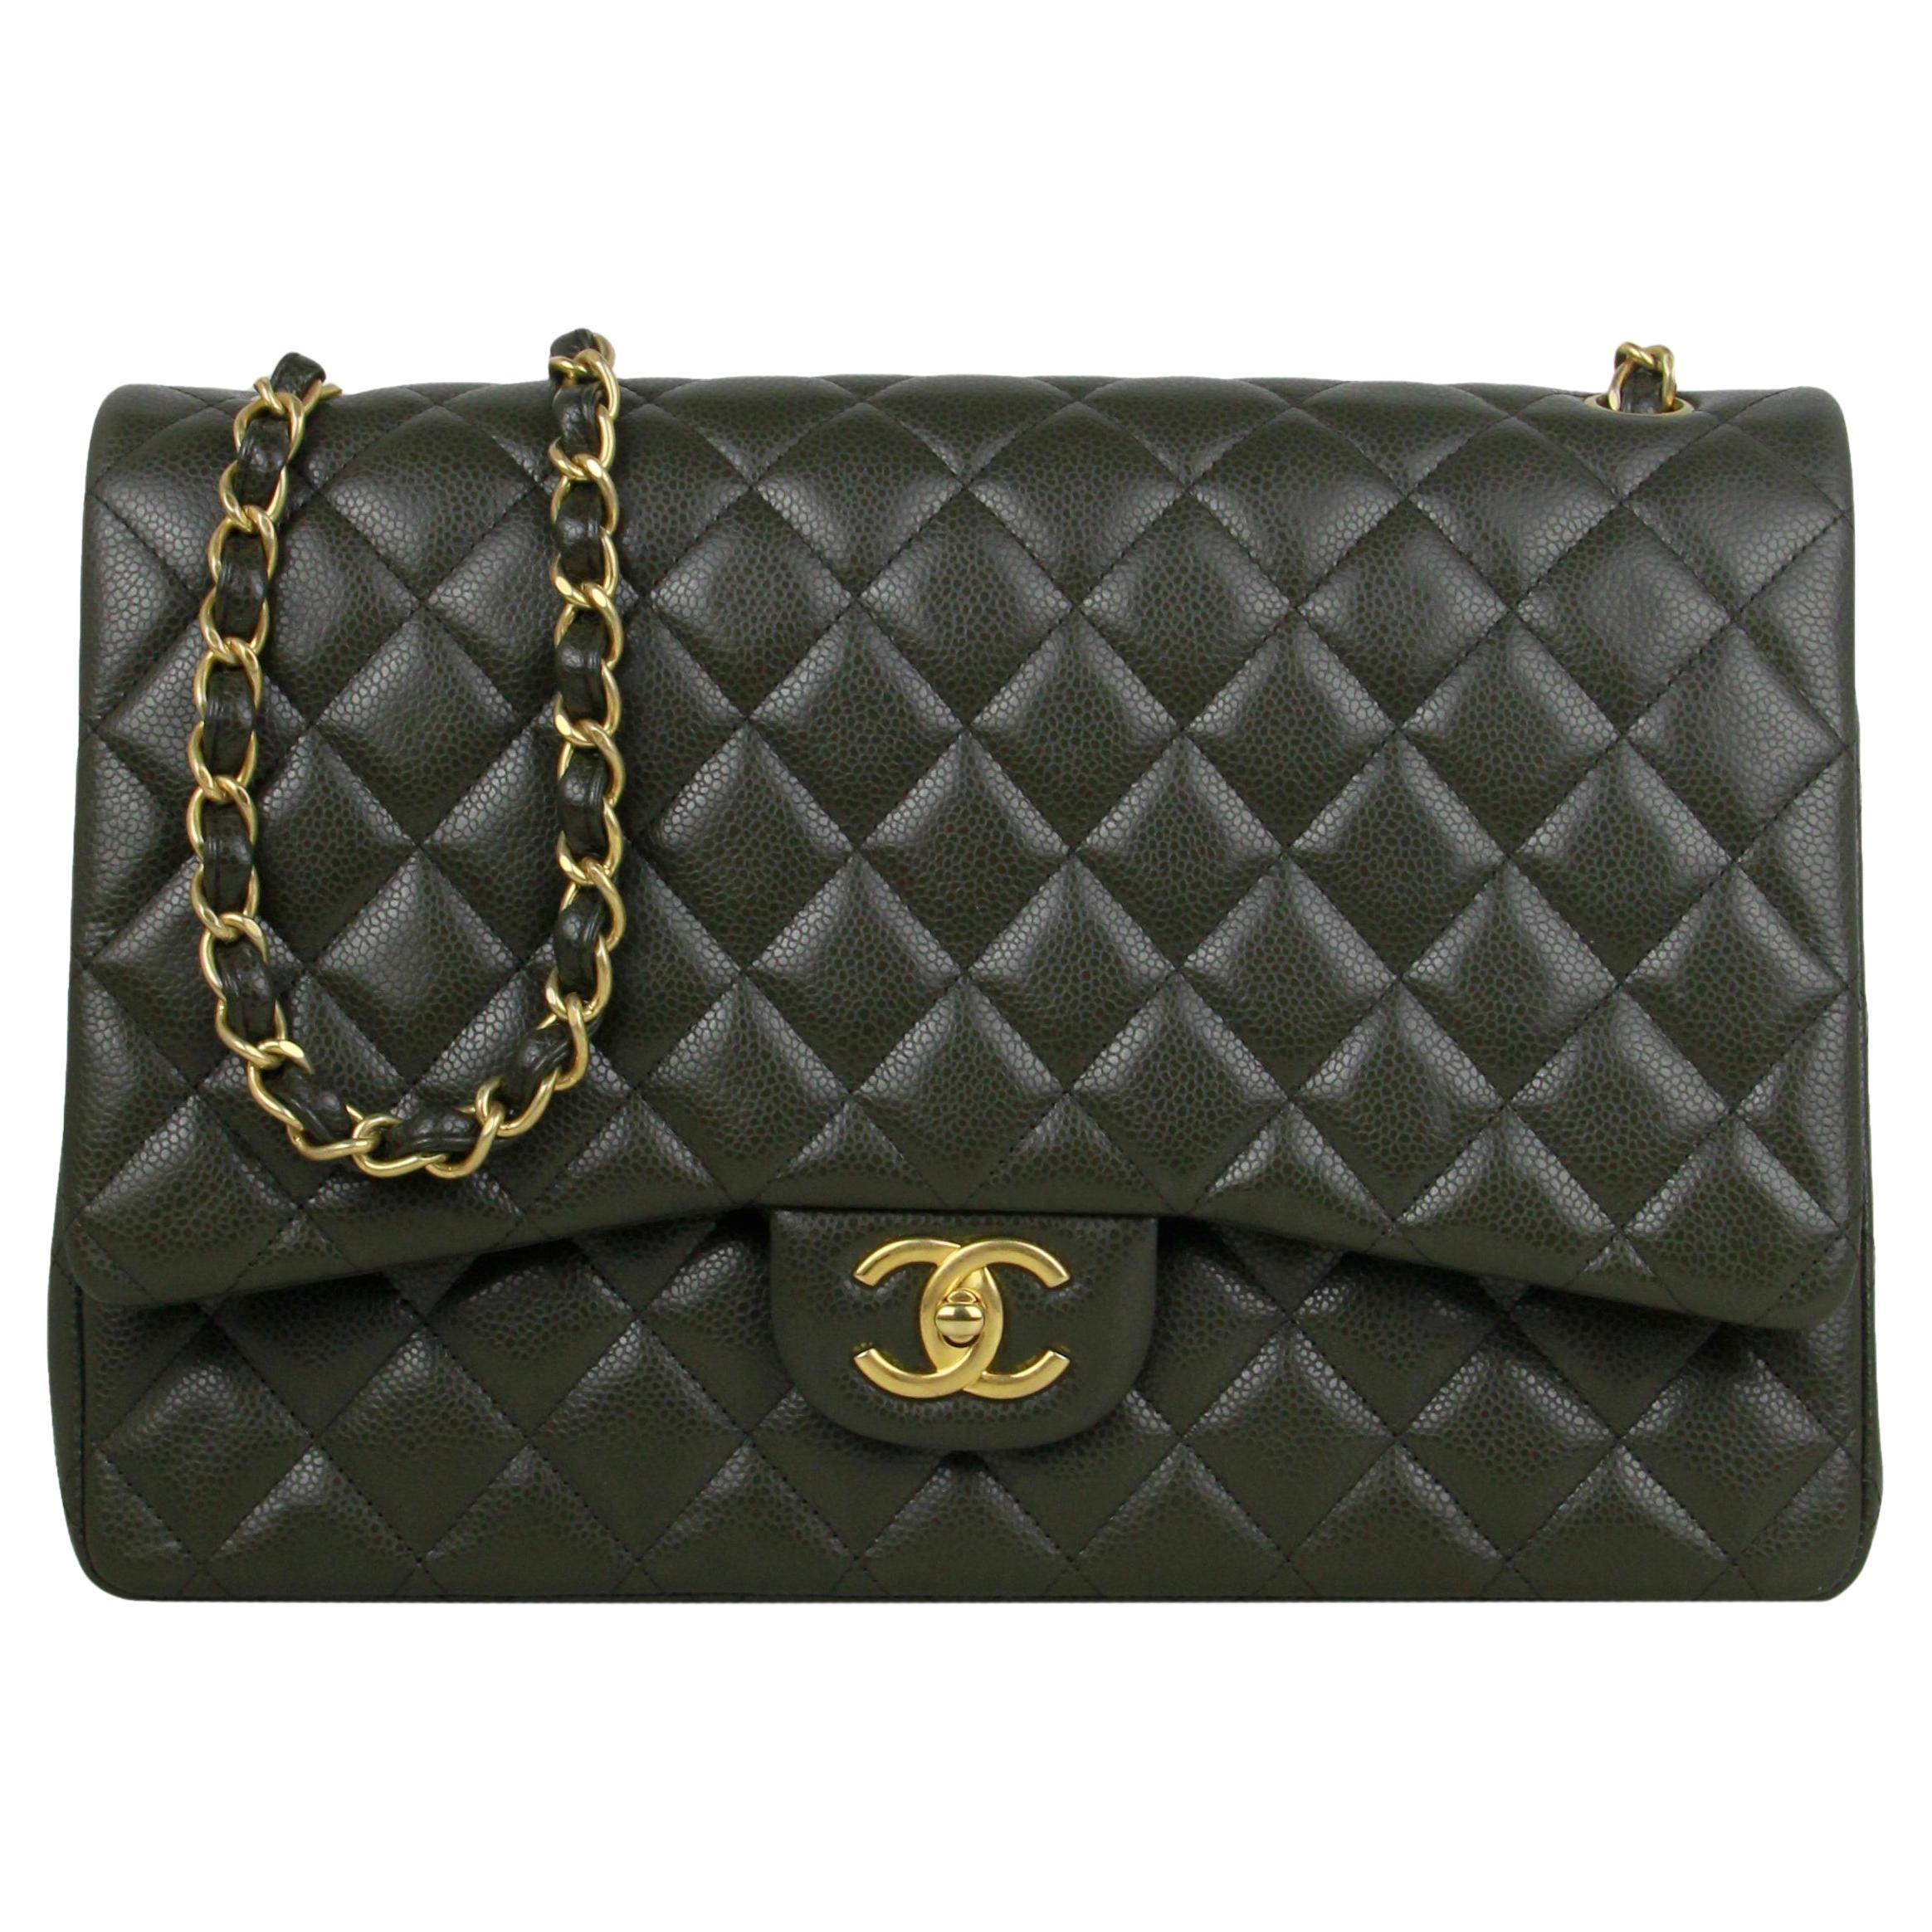 Chanel Vintage 1997 Classic Single Rare Caviar Leather Bag